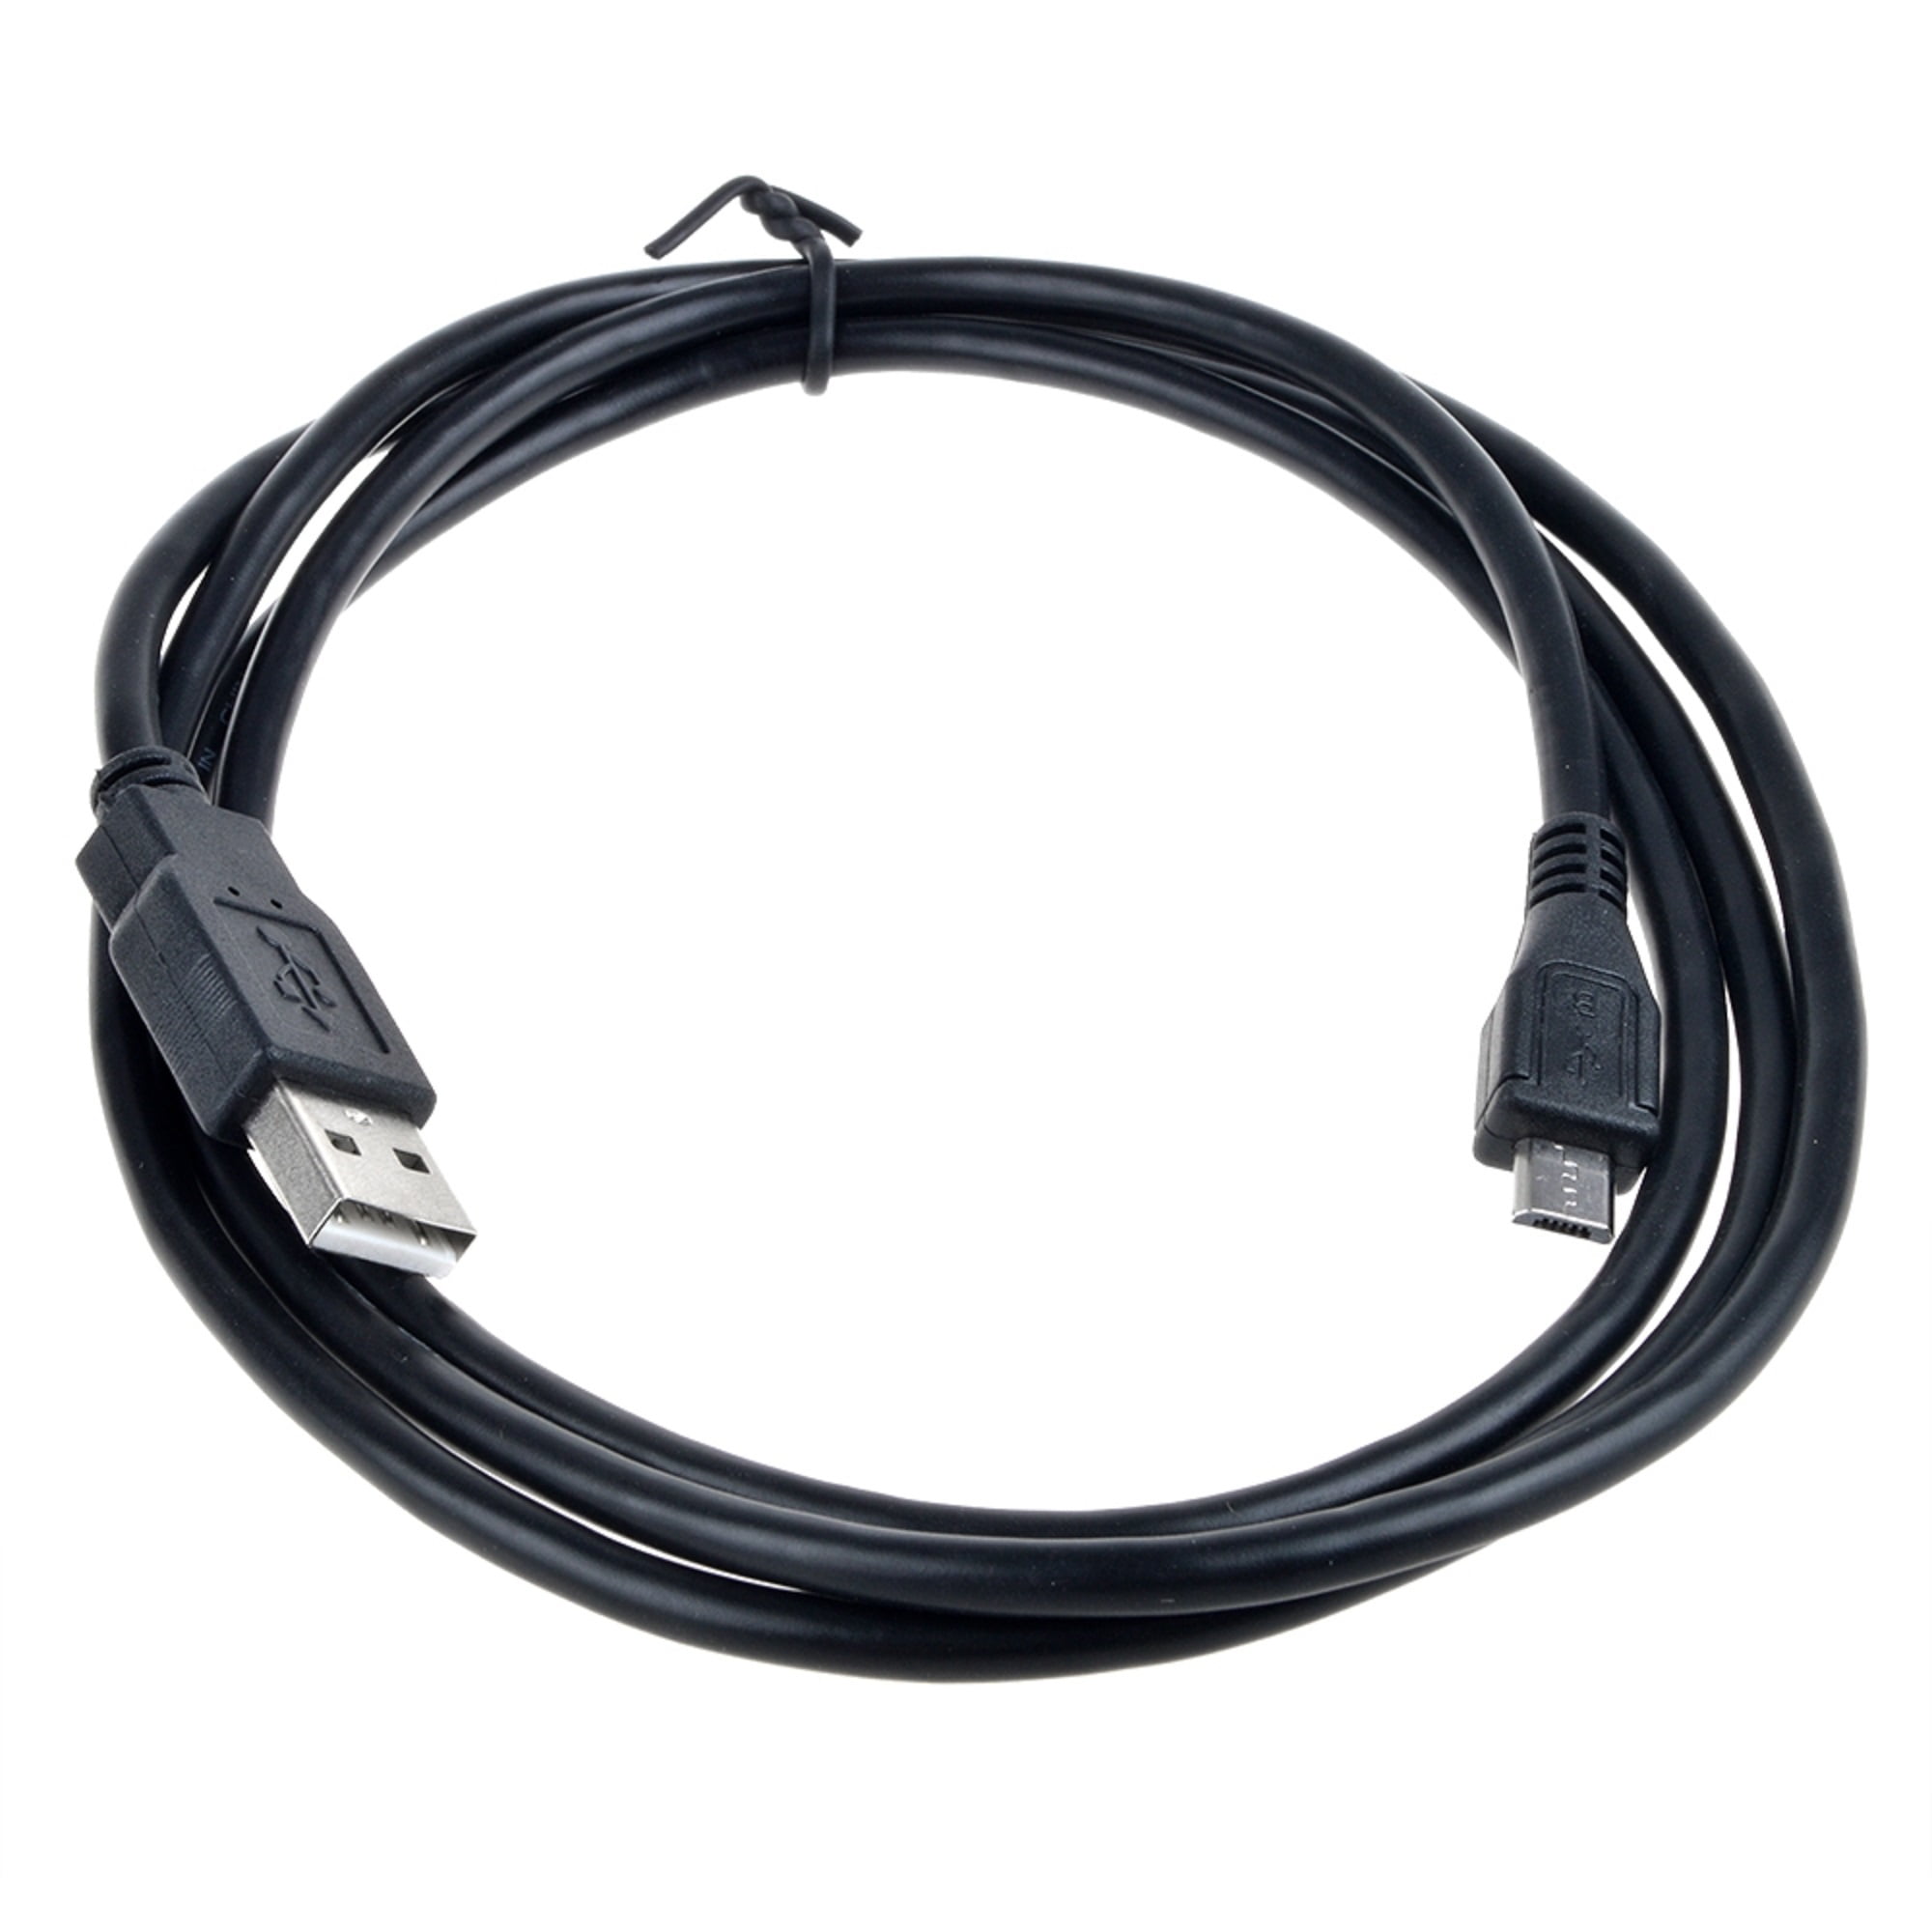 Vani USB Charging Cord Cable Lead for Soundsport Pulse Wireless Headphones 